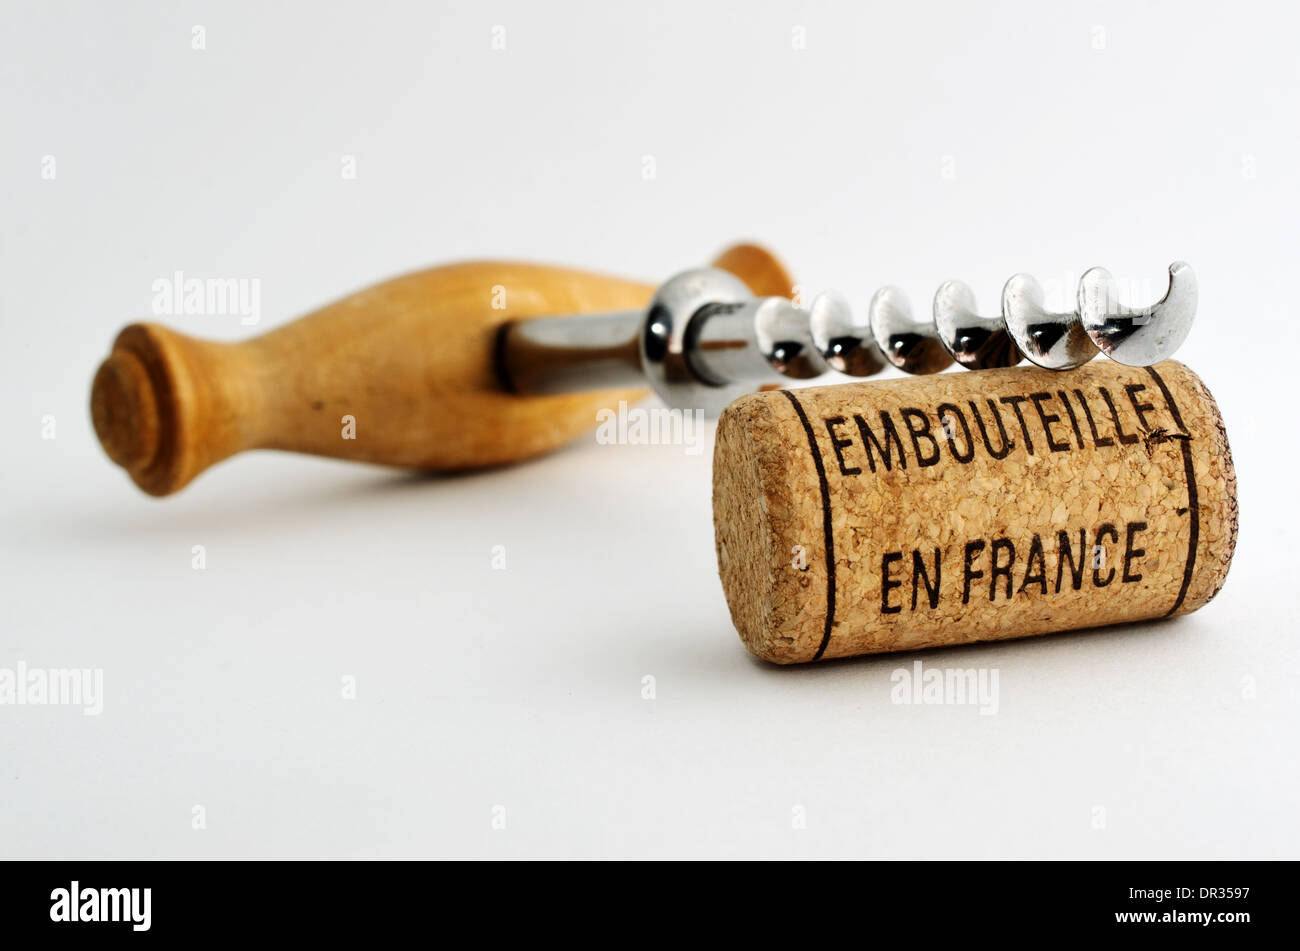 vintage old corkscrew and wine cork with inscription embouteille en France Stock Photo